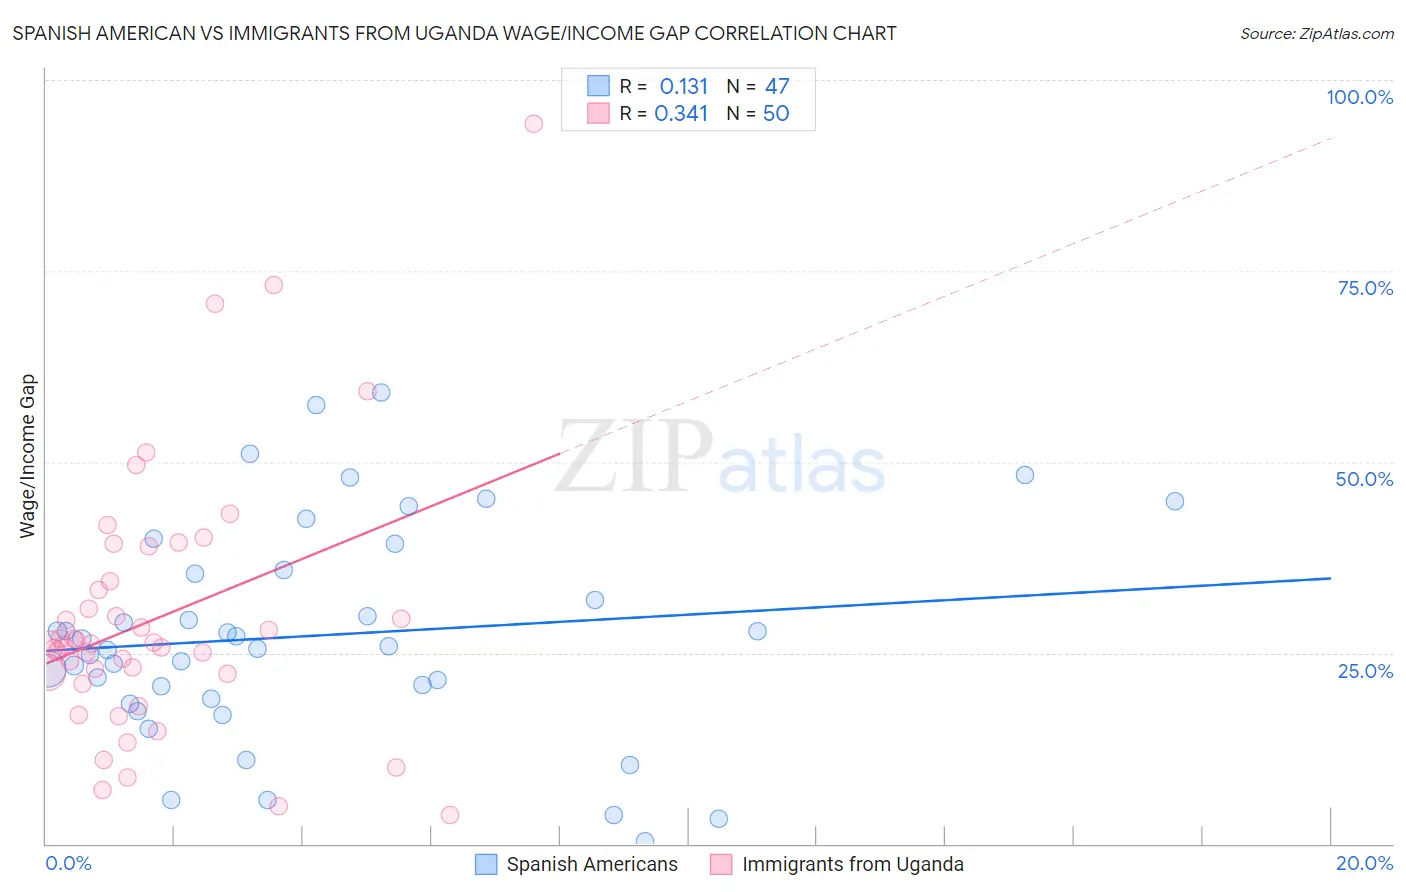 Spanish American vs Immigrants from Uganda Wage/Income Gap